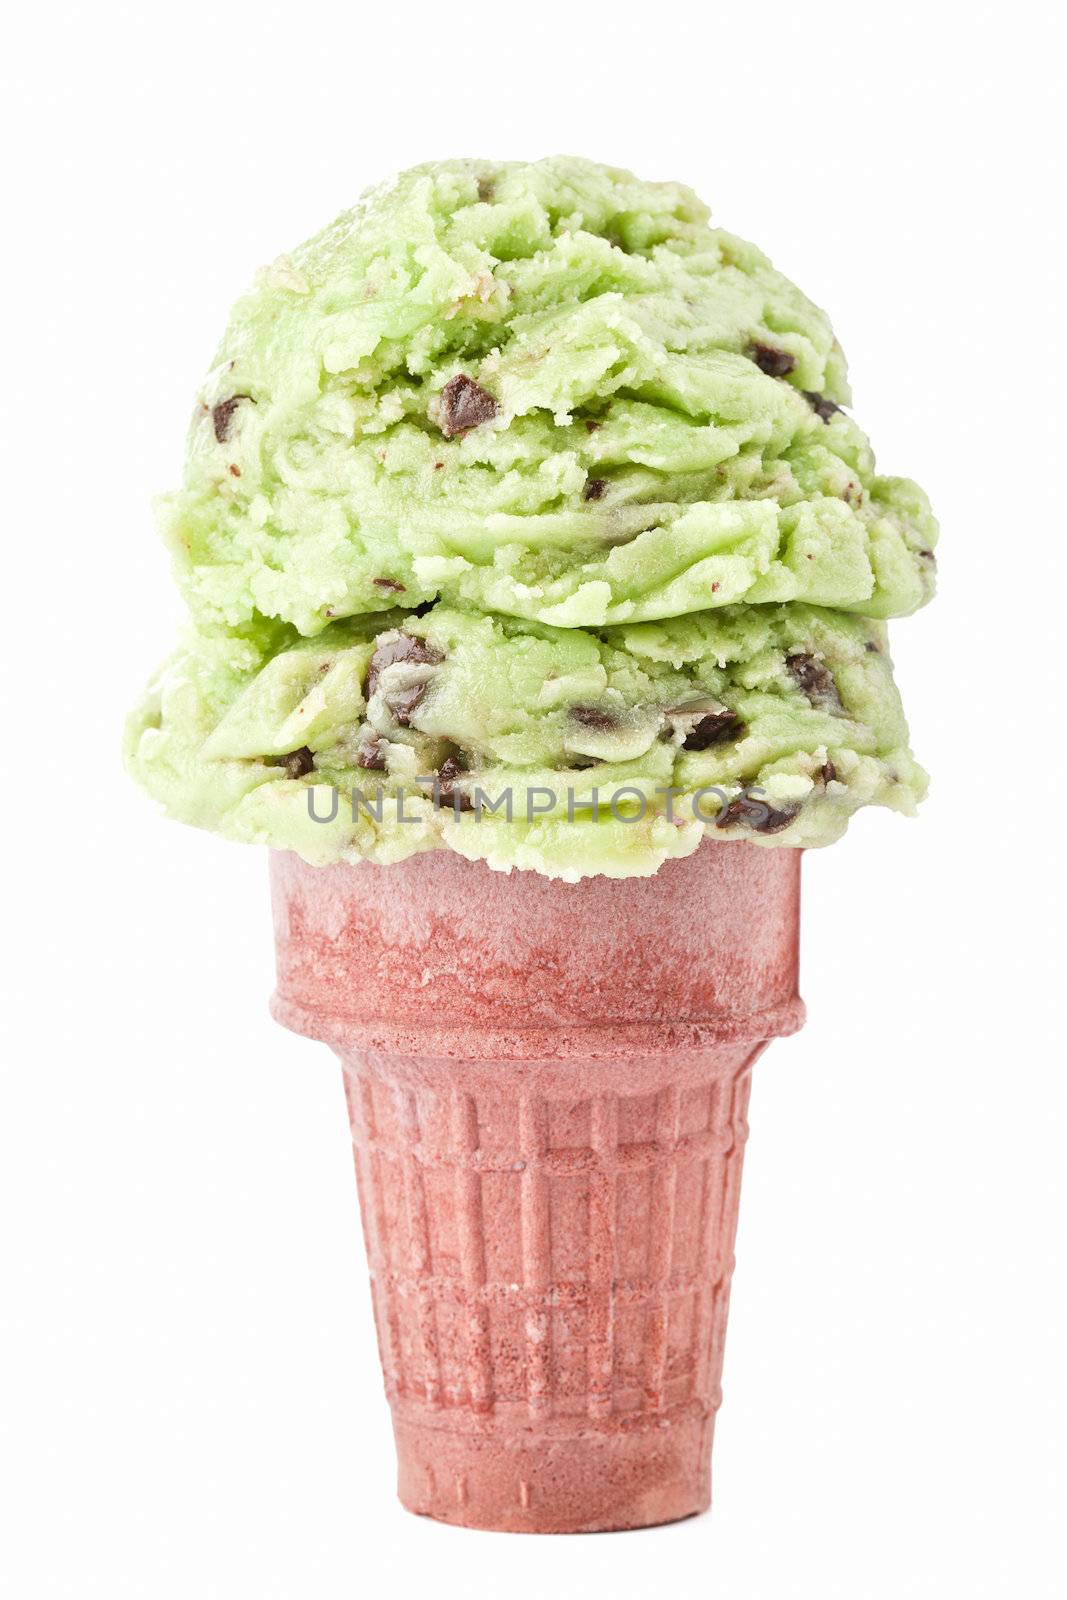 green tea ice cream by kozzi